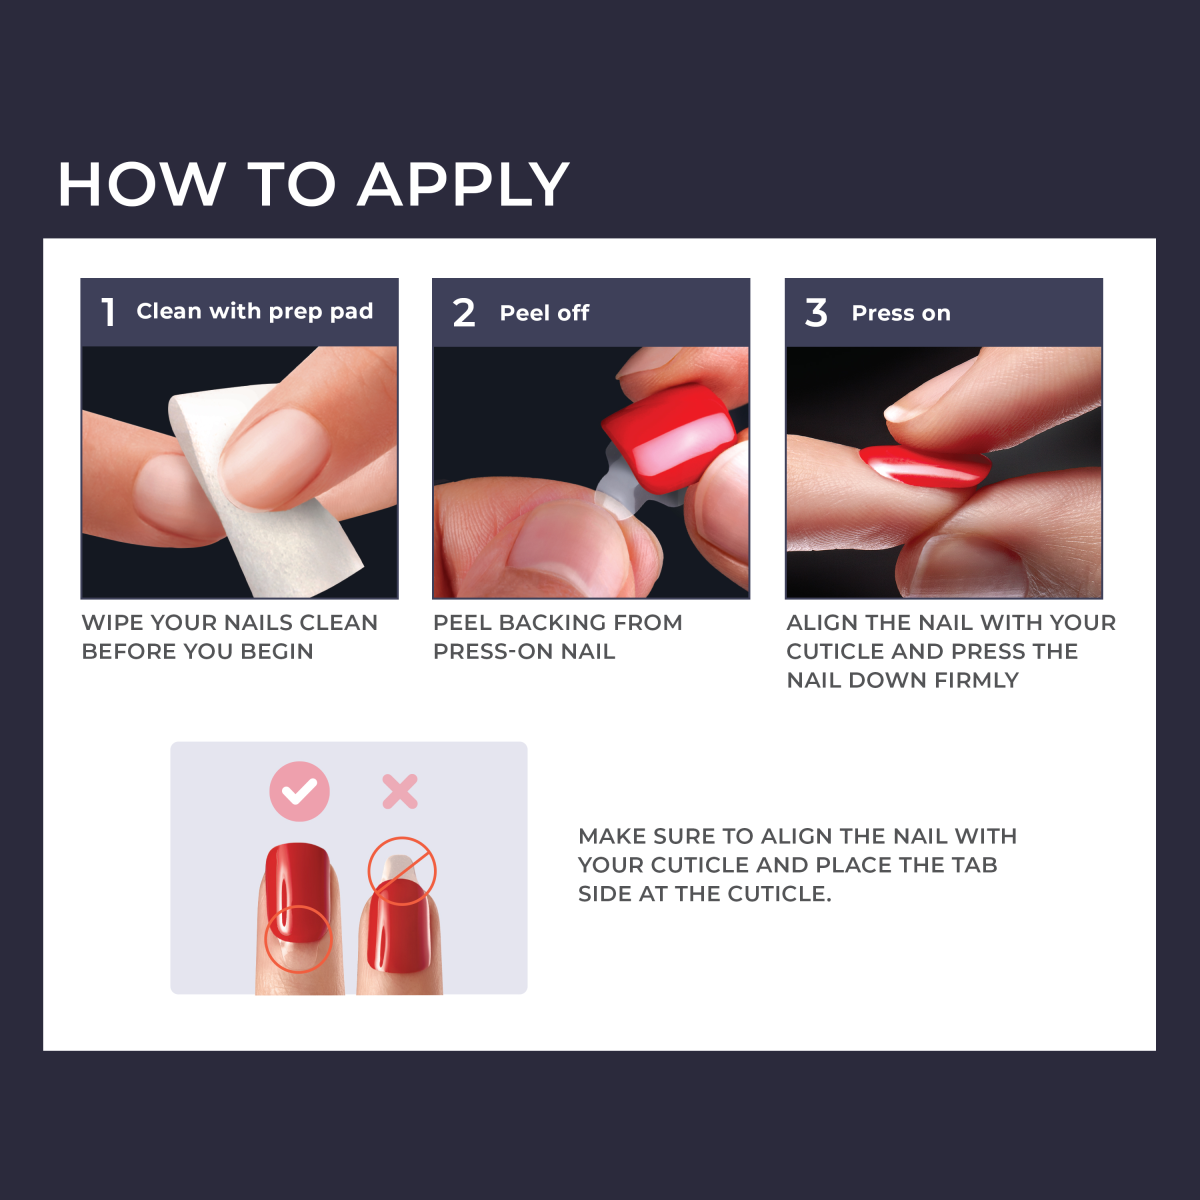 imPRESS Press-On Manicure - Mesmerize